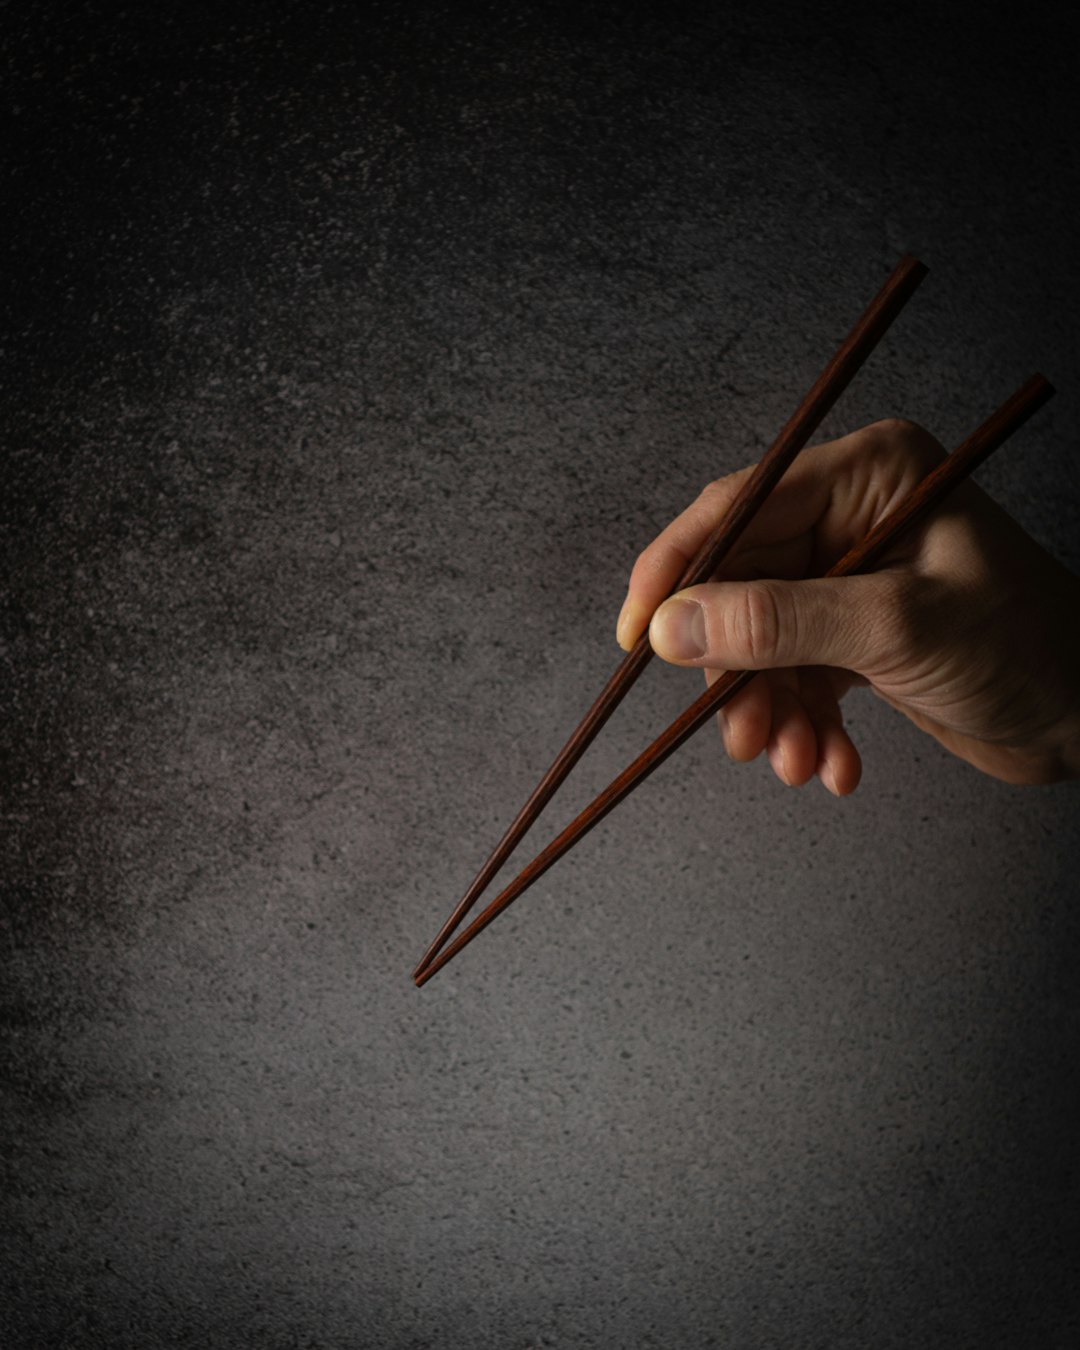 chopsticks etiquette, chopsticks, person holding brown wooden pencil